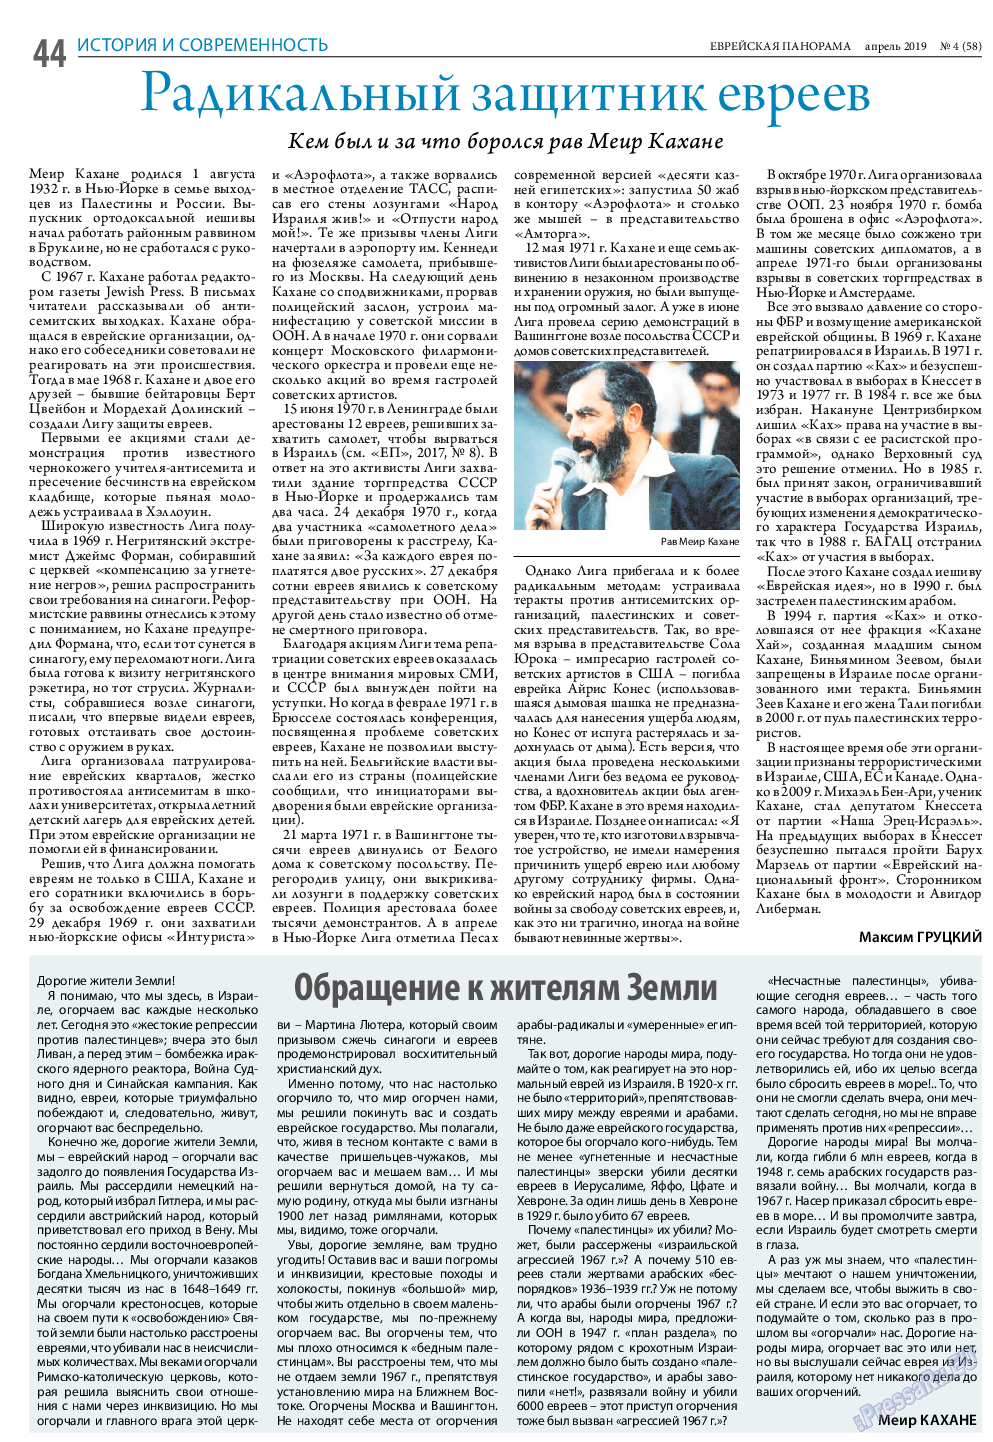 Еврейская панорама, газета. 2019 №4 стр.44